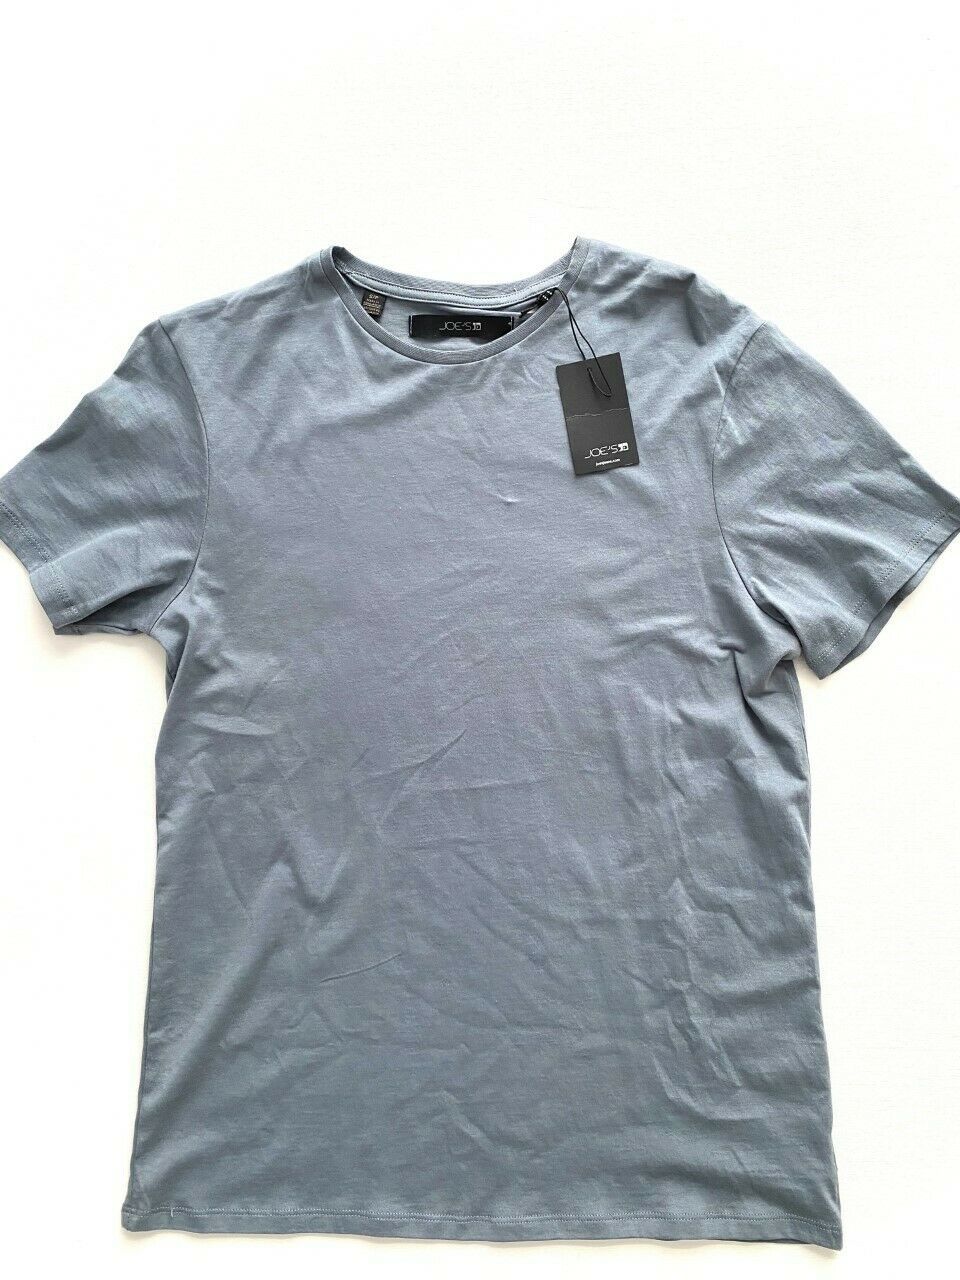 Joe's Cotton Crew Neck Tee Shirt Blue ( S )  - $57.89